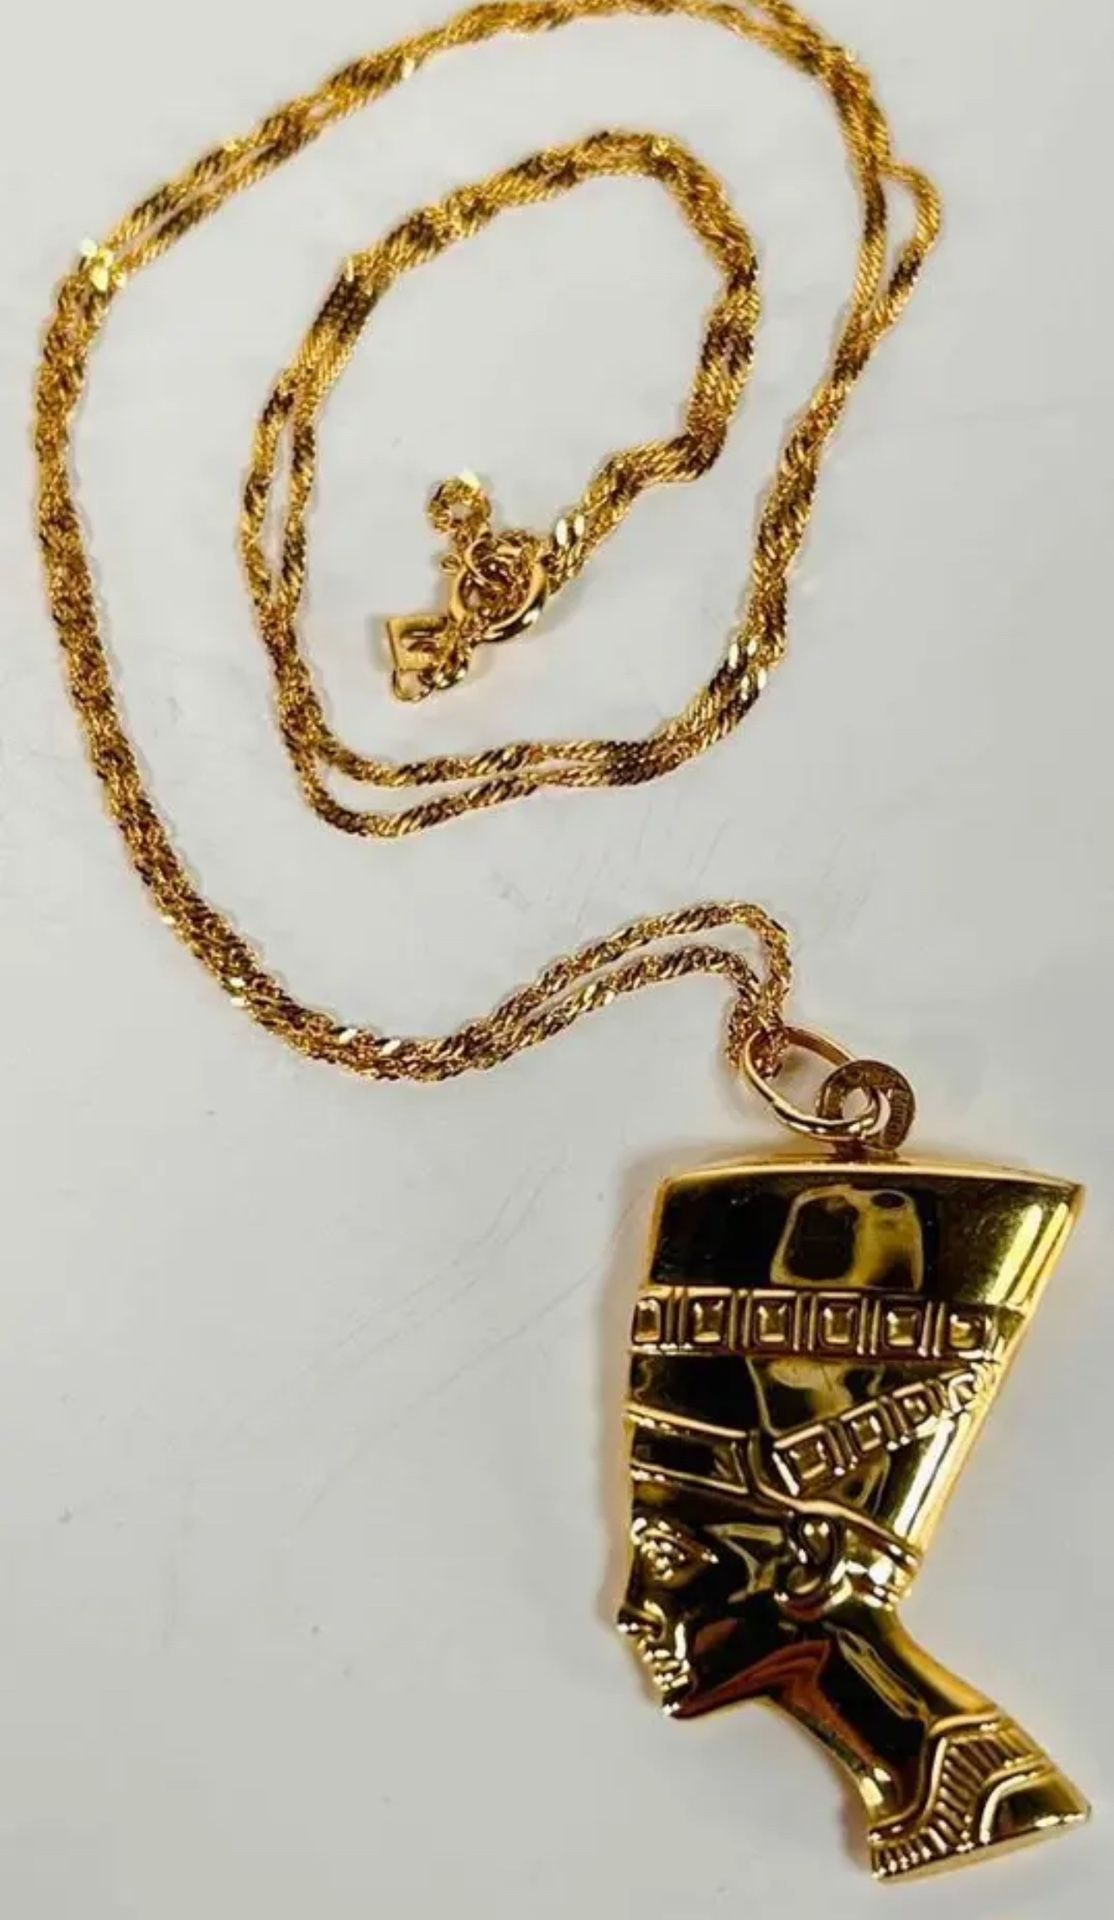 Gorgeous Milor 18K Gold Nefertiti Egyptian Queen Pendant & Chain Necklace